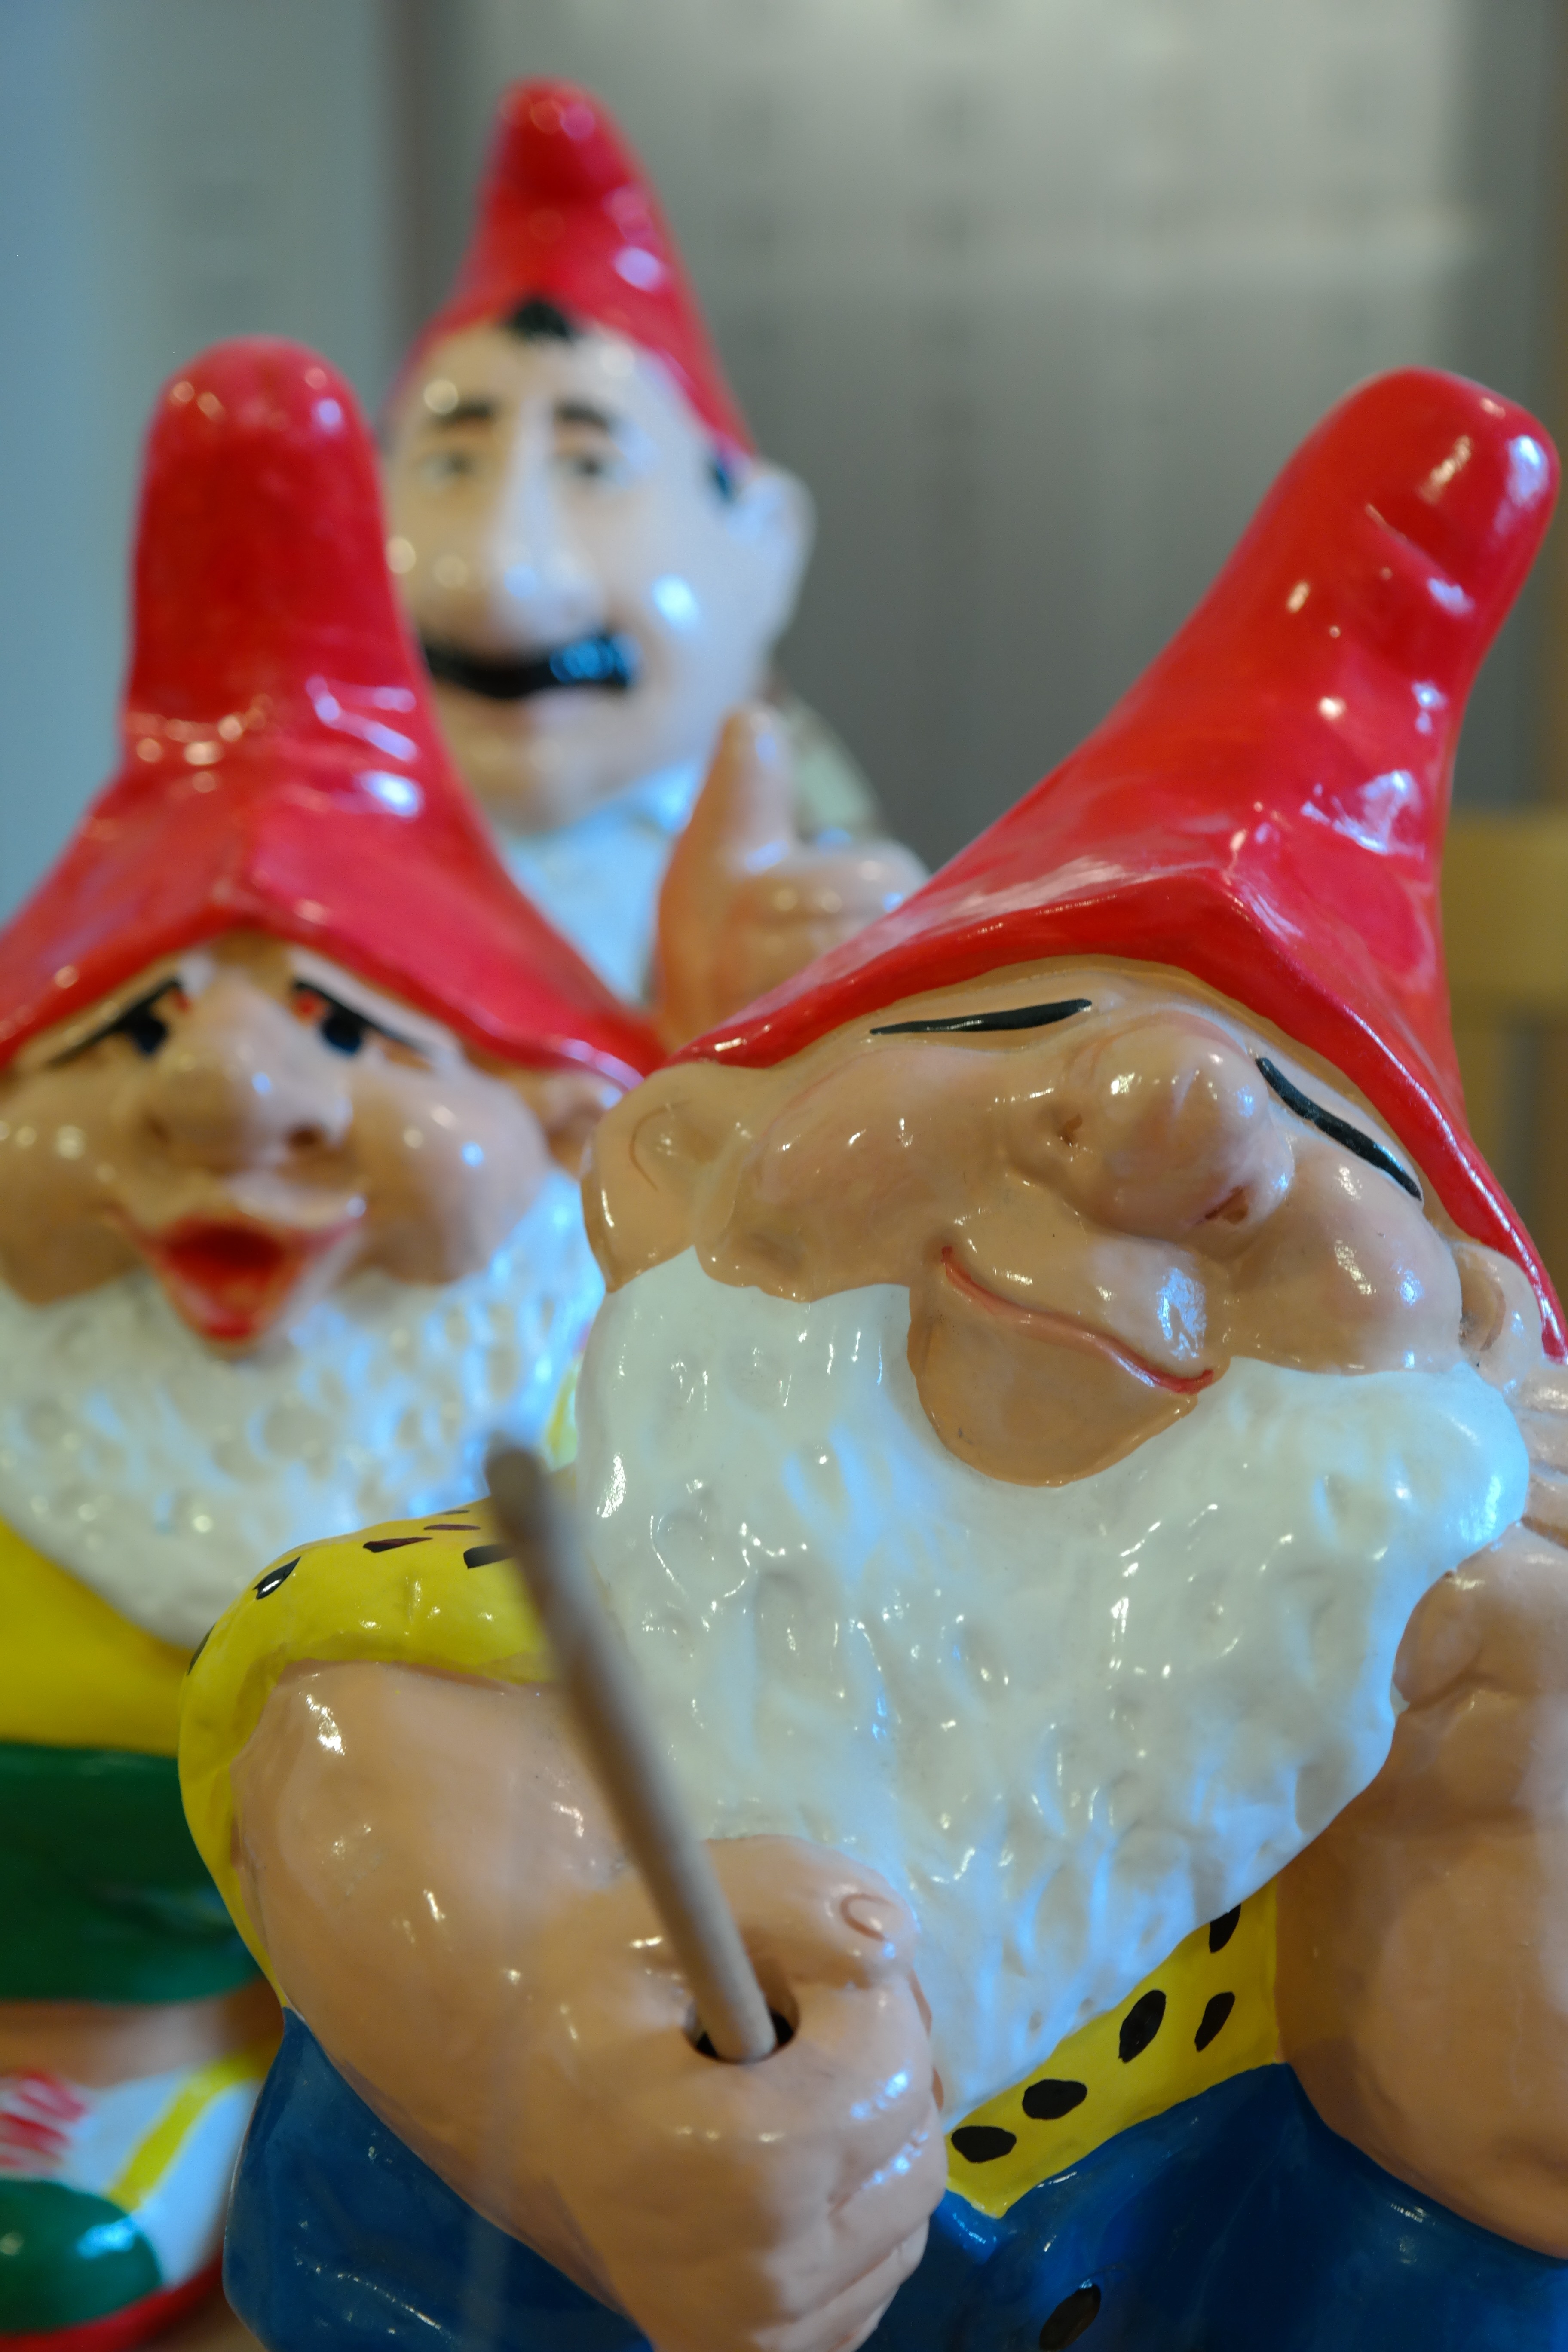 gnome figurines set